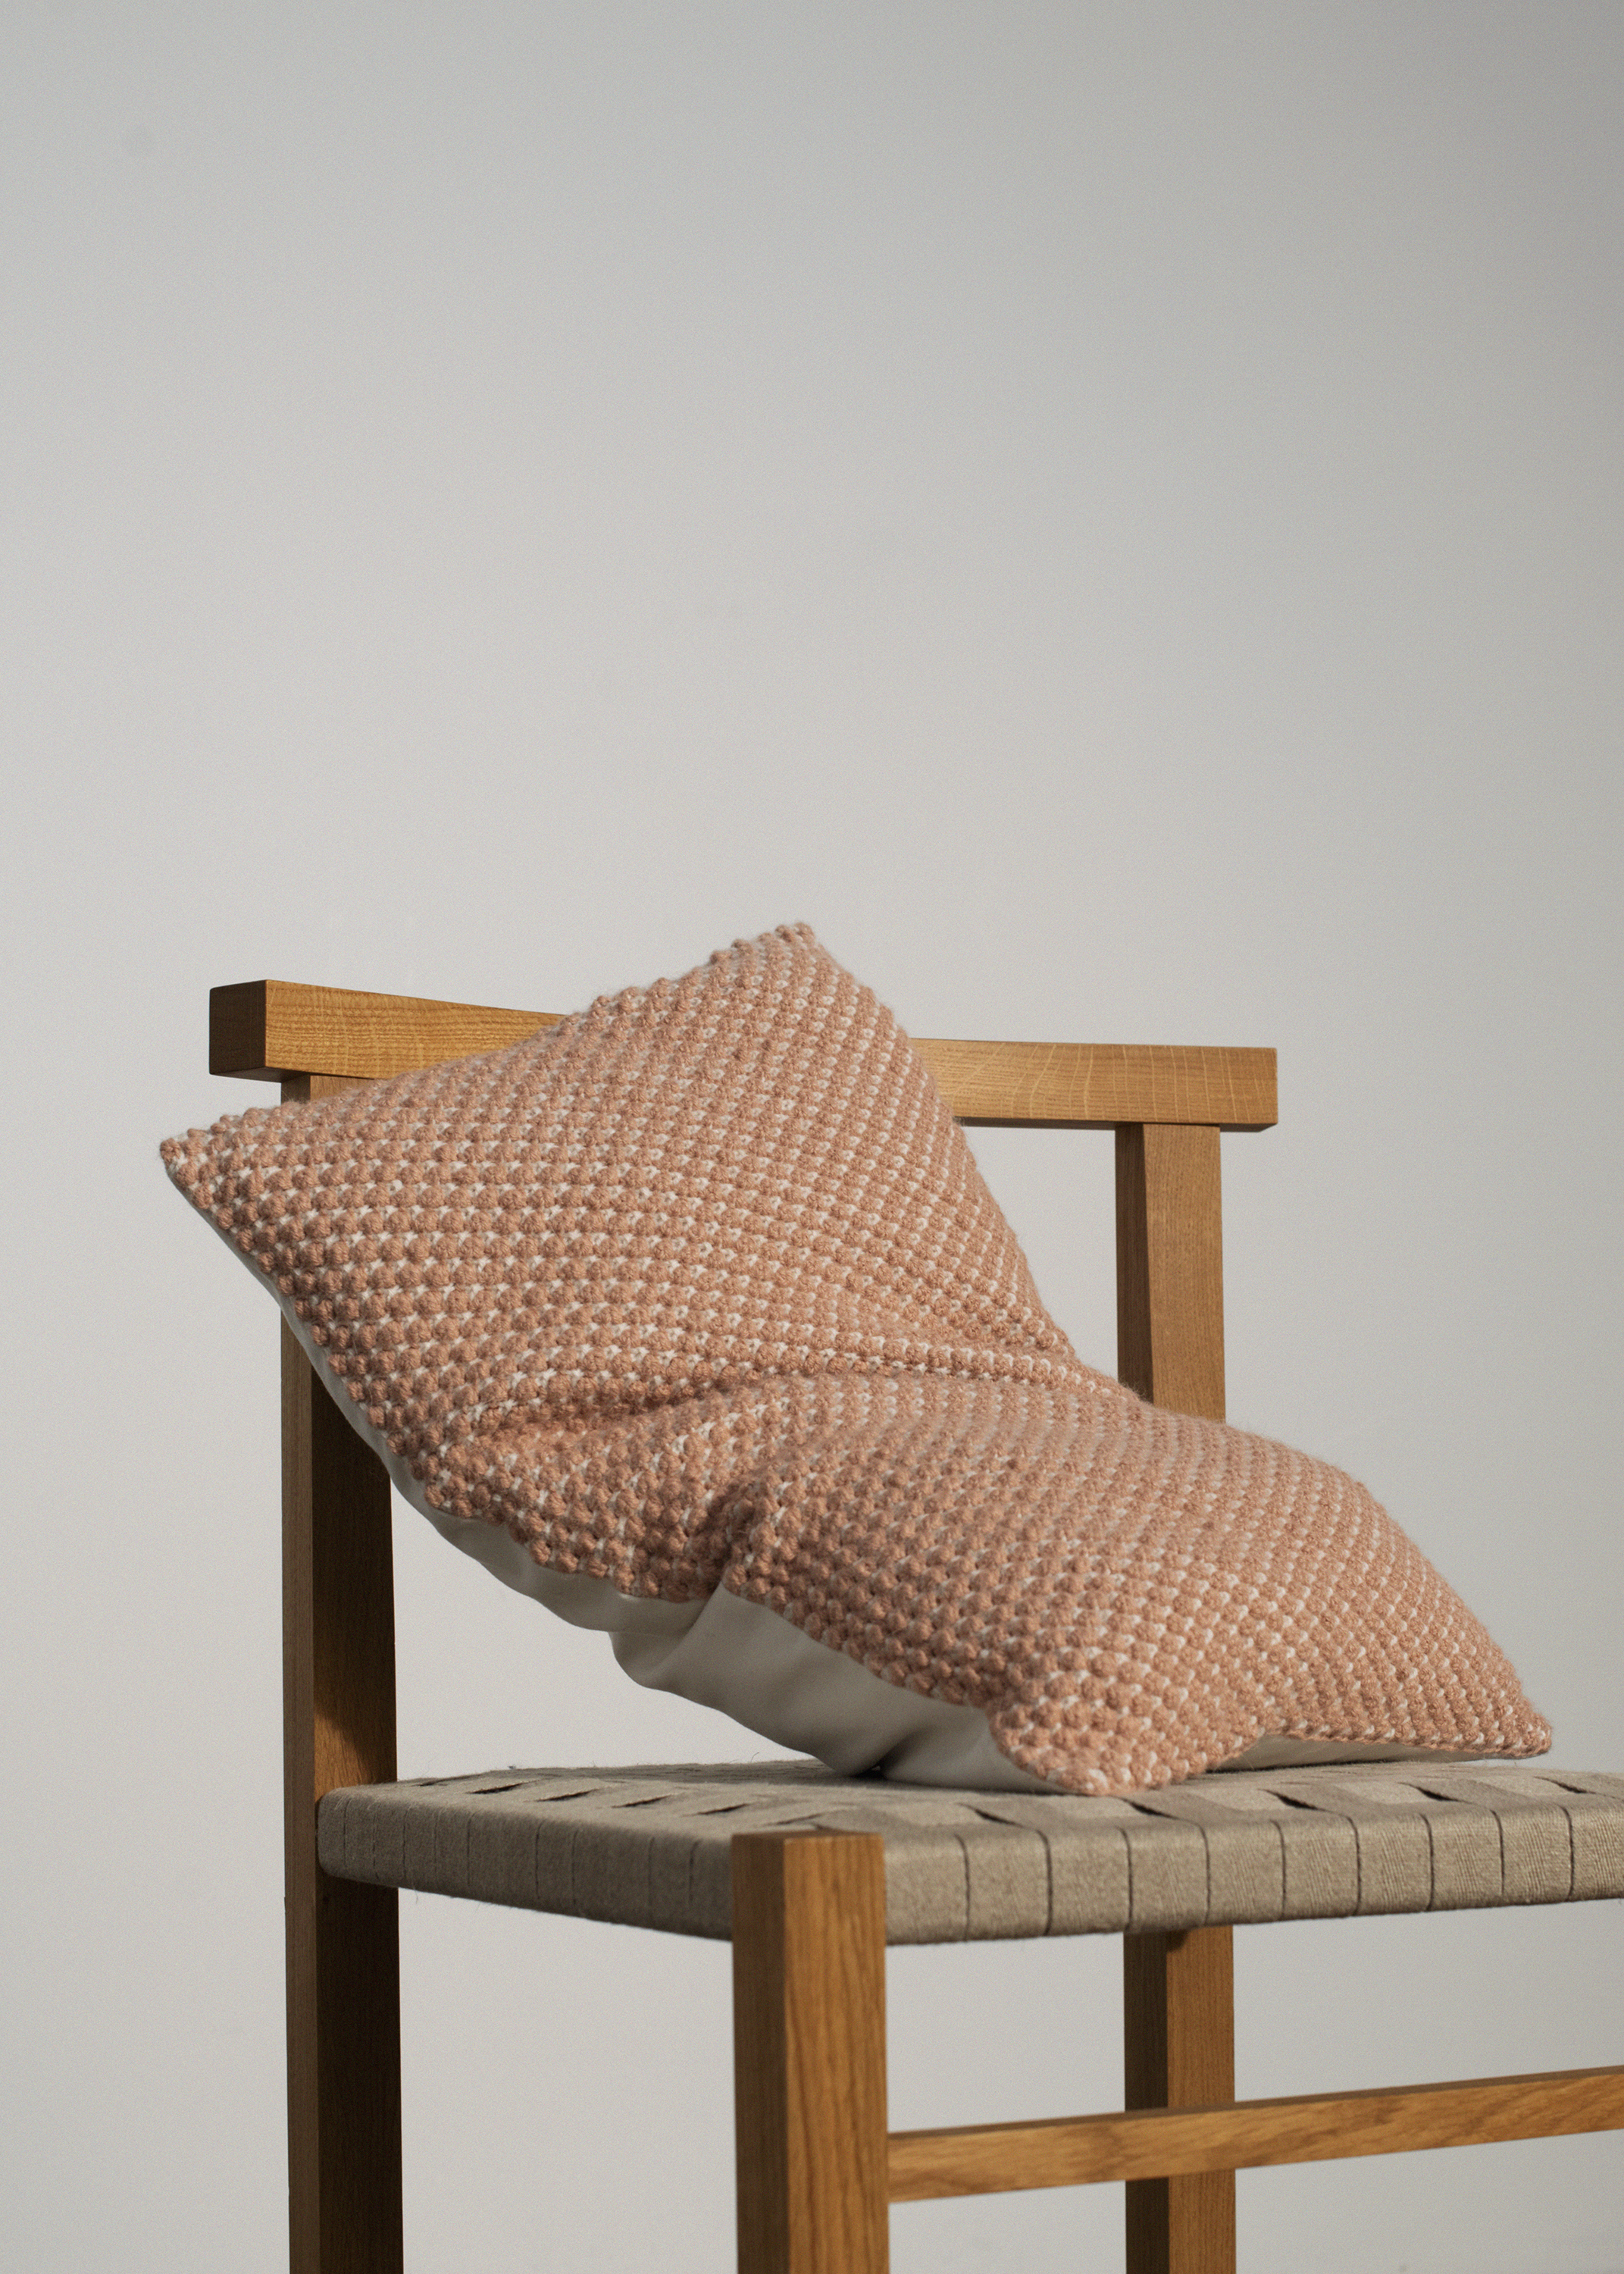 Cushions - Heather Classic pillow (40x60)